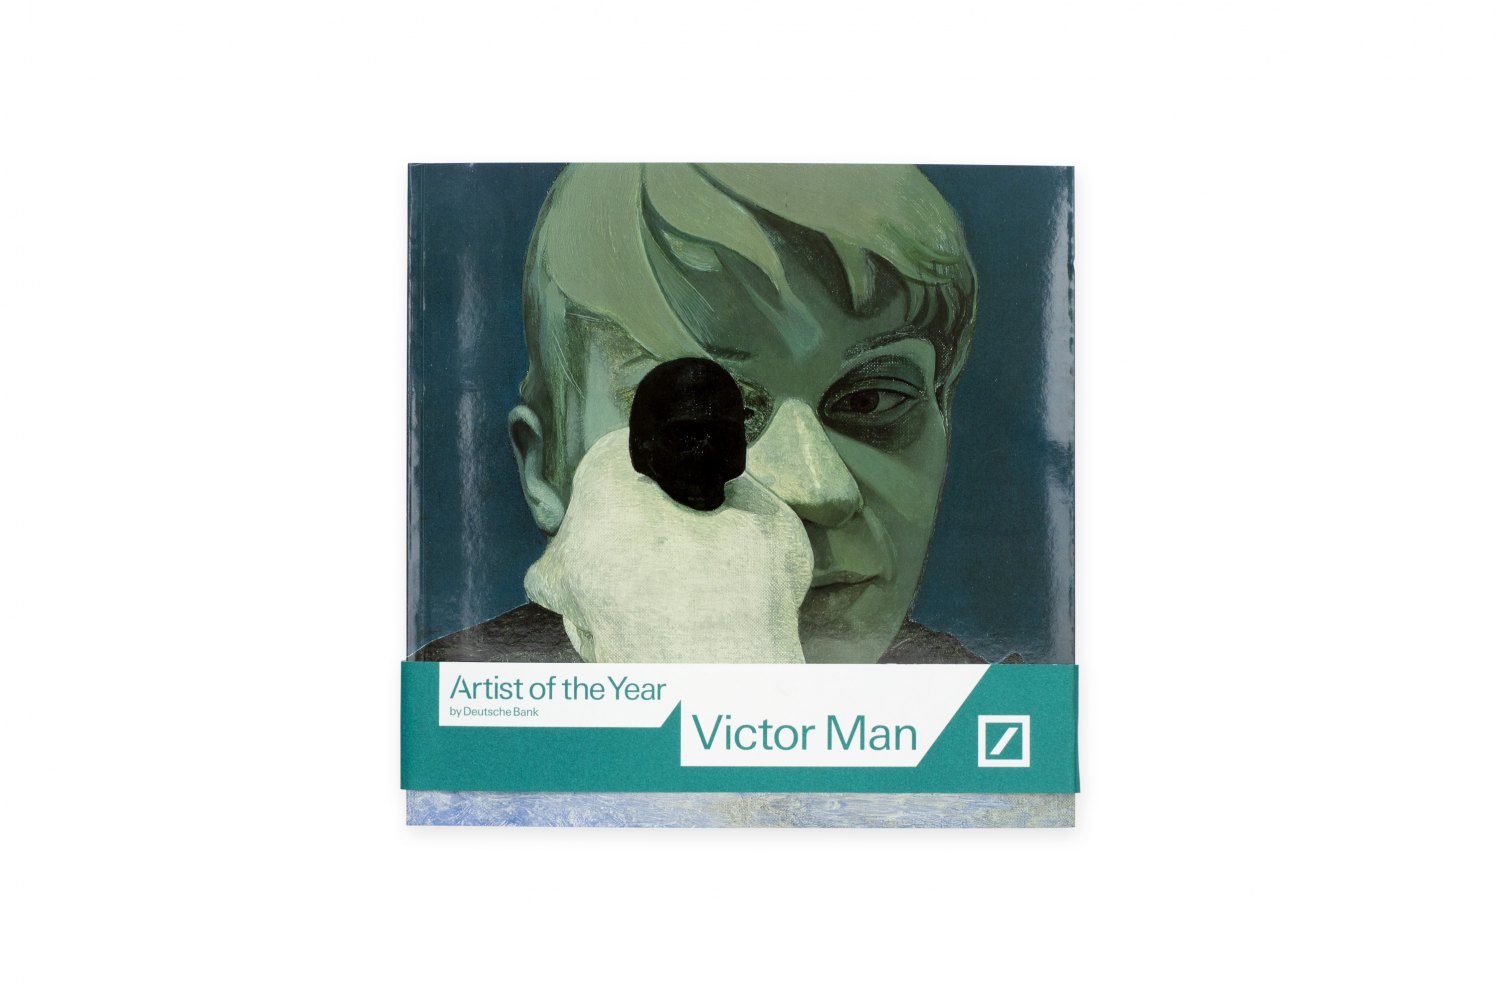 Victor Man, Szindbád – Artist of the Year 2014  Catalogue, Deutsche Bank Kunsthalle, Berlin 2014/15, 195 p. ISBN 978-3-77573-806-4